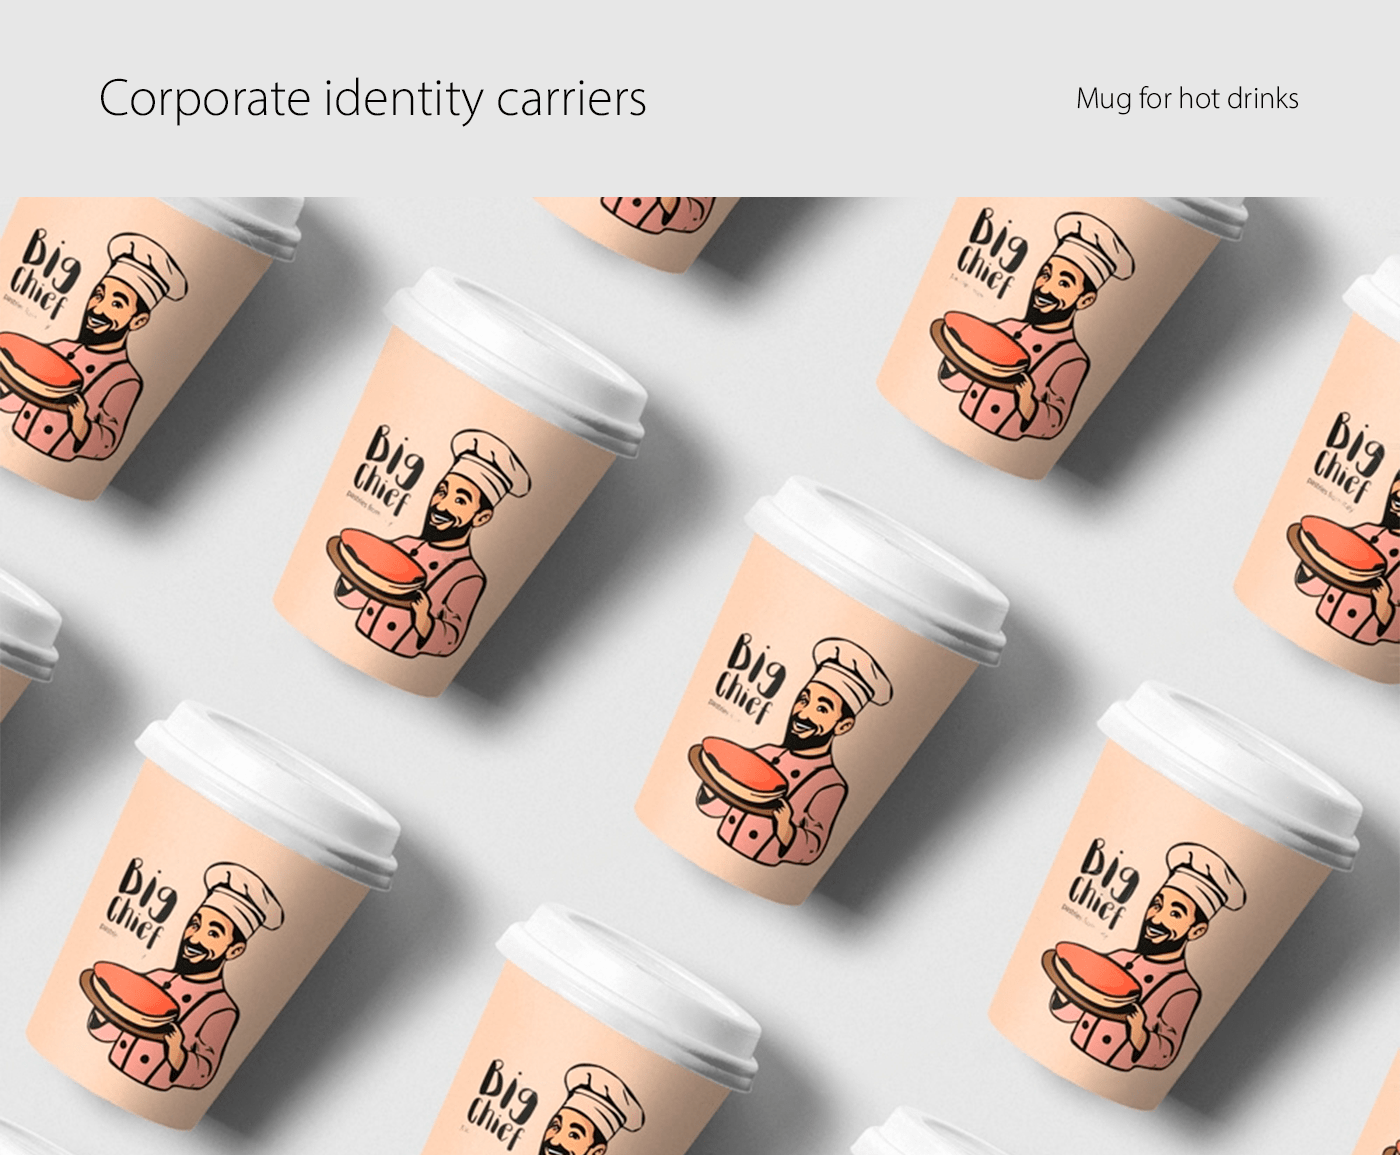 bakery Logo Design brand identity adobe illustrator Adobe Photoshop cafe Food  restaurant